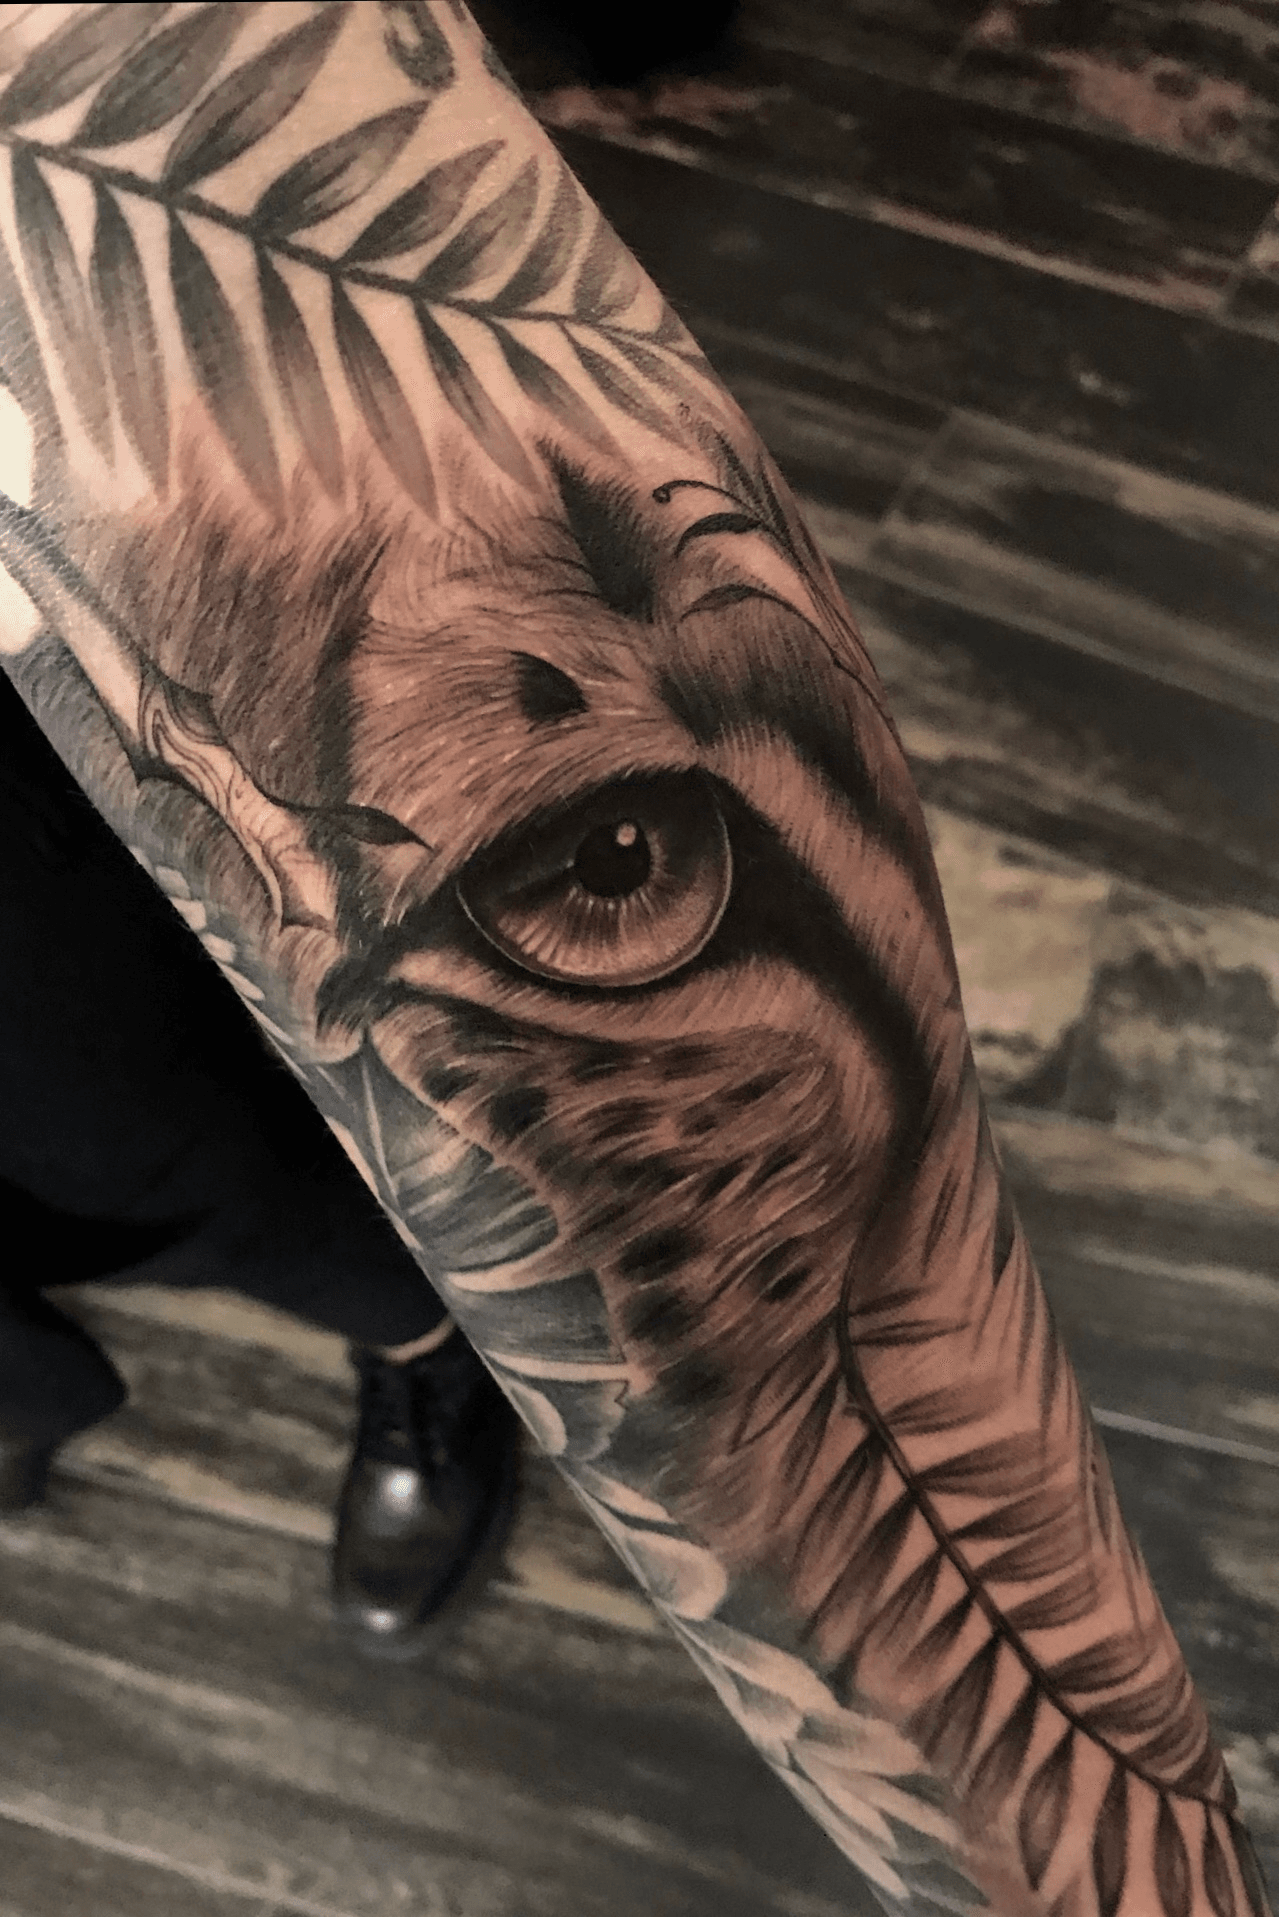 Microrealistic cheetah tattoo on the inner forearm